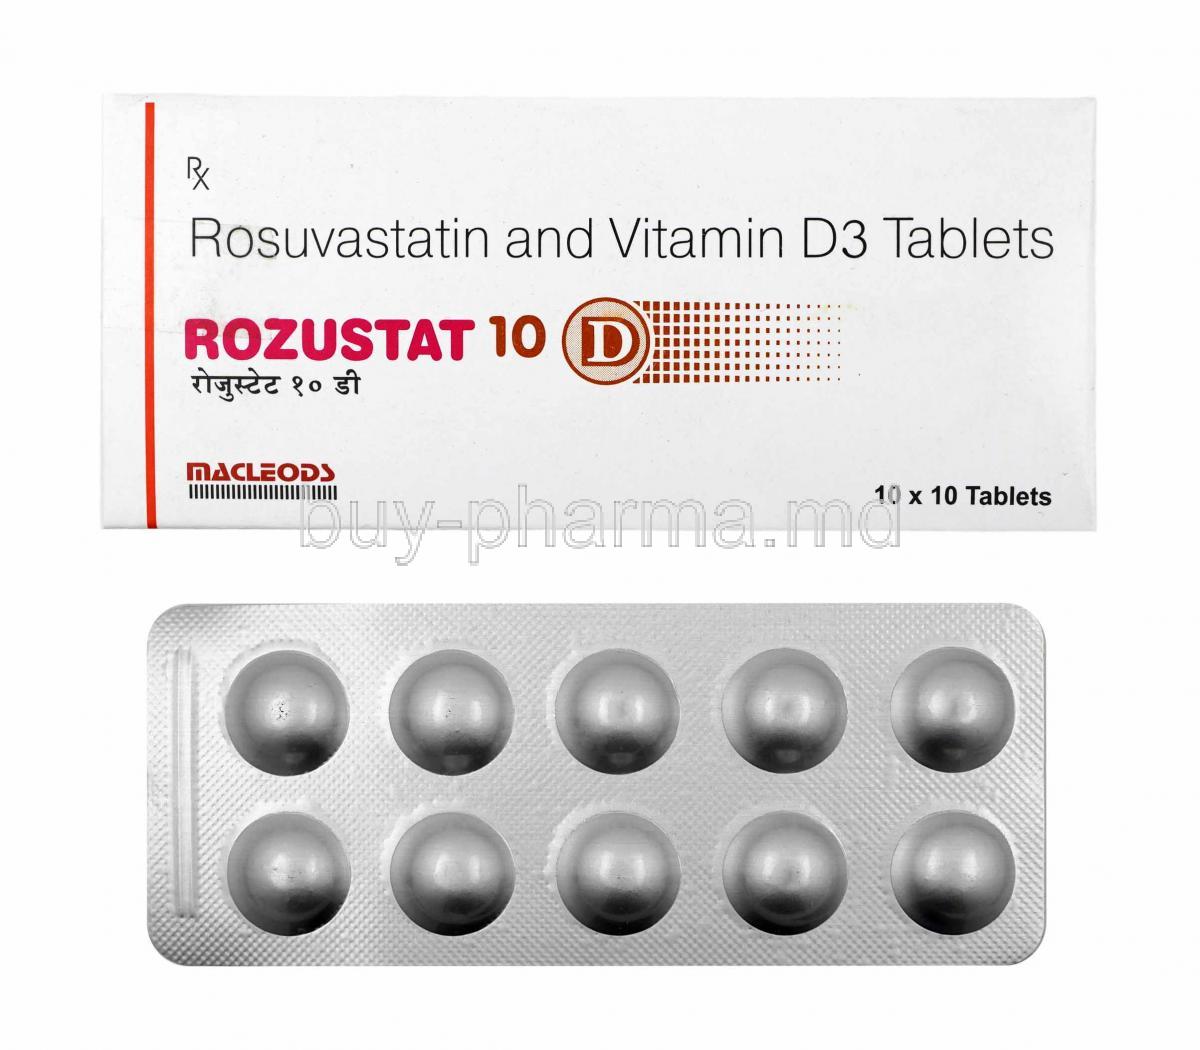 Rozustat D, Rosuvastatin and Vitamin D3 box and tablets